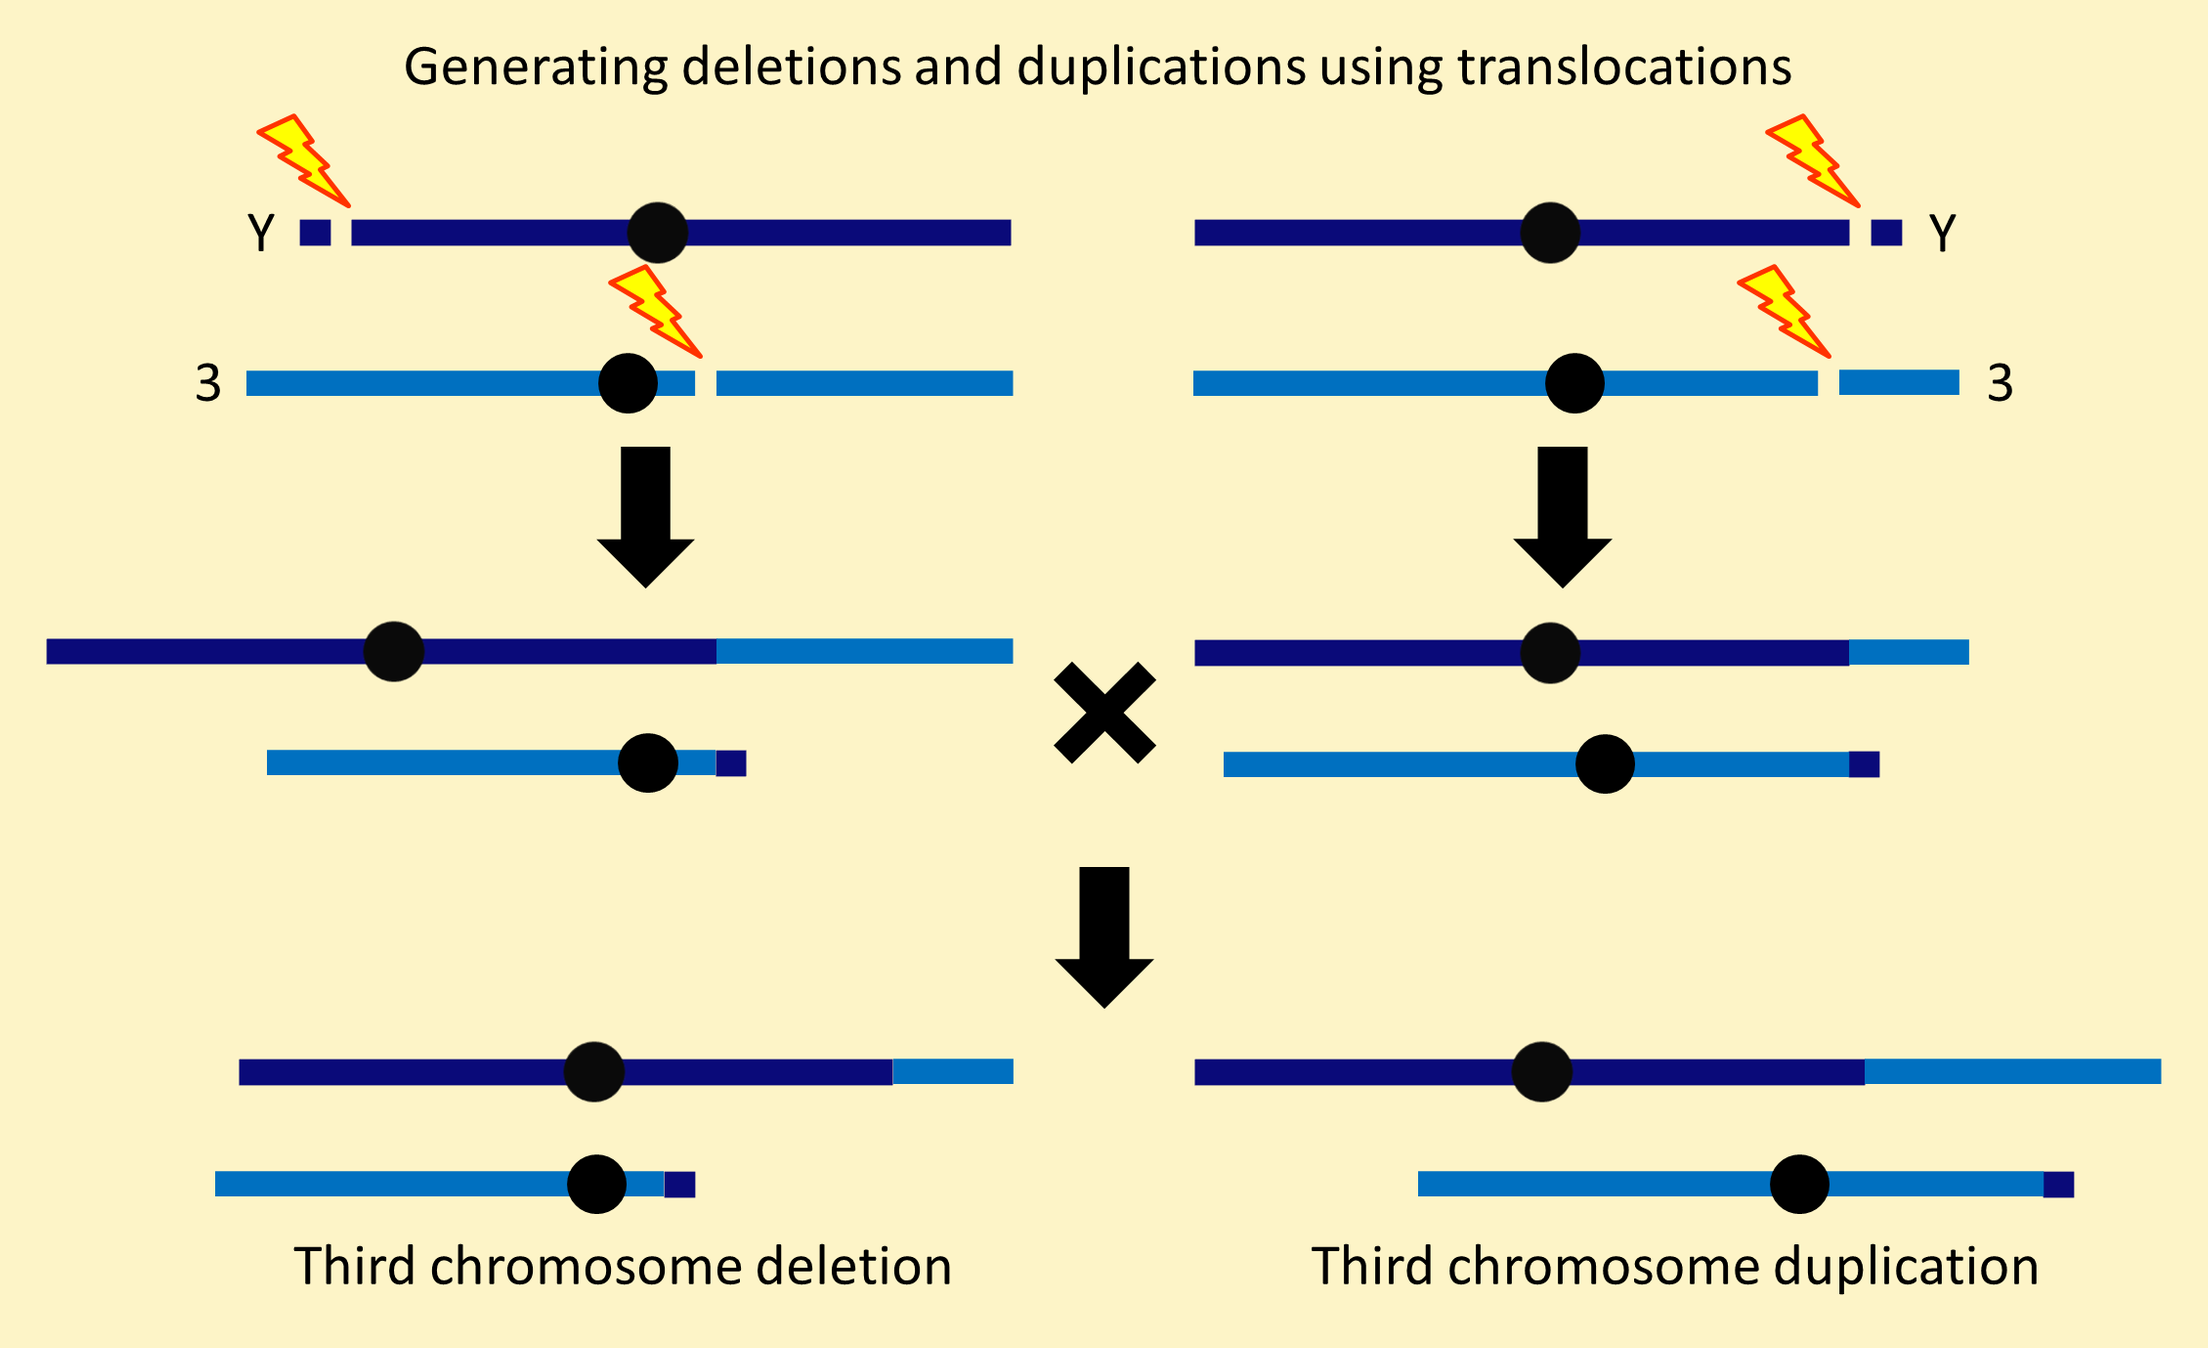 Third chromosome deletion / duplication